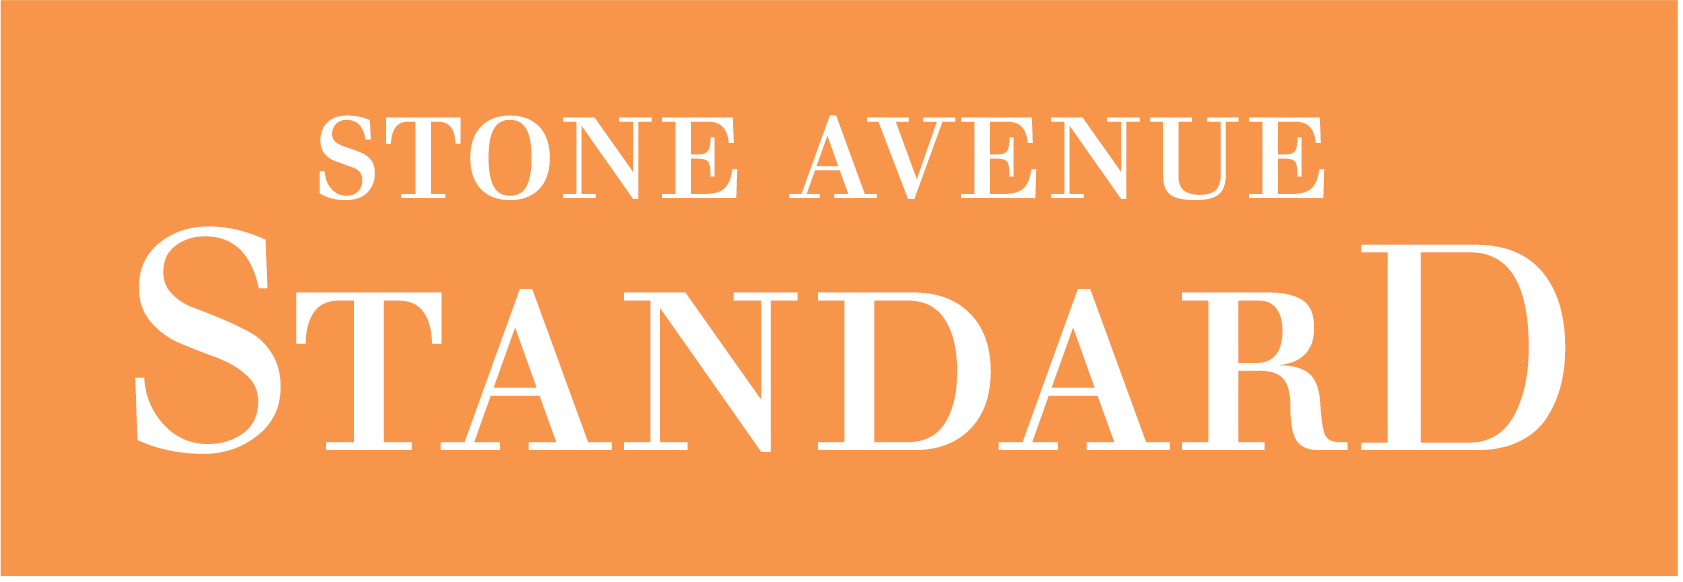 Stone Avenue Standard | 1800 N. Stone Ave.